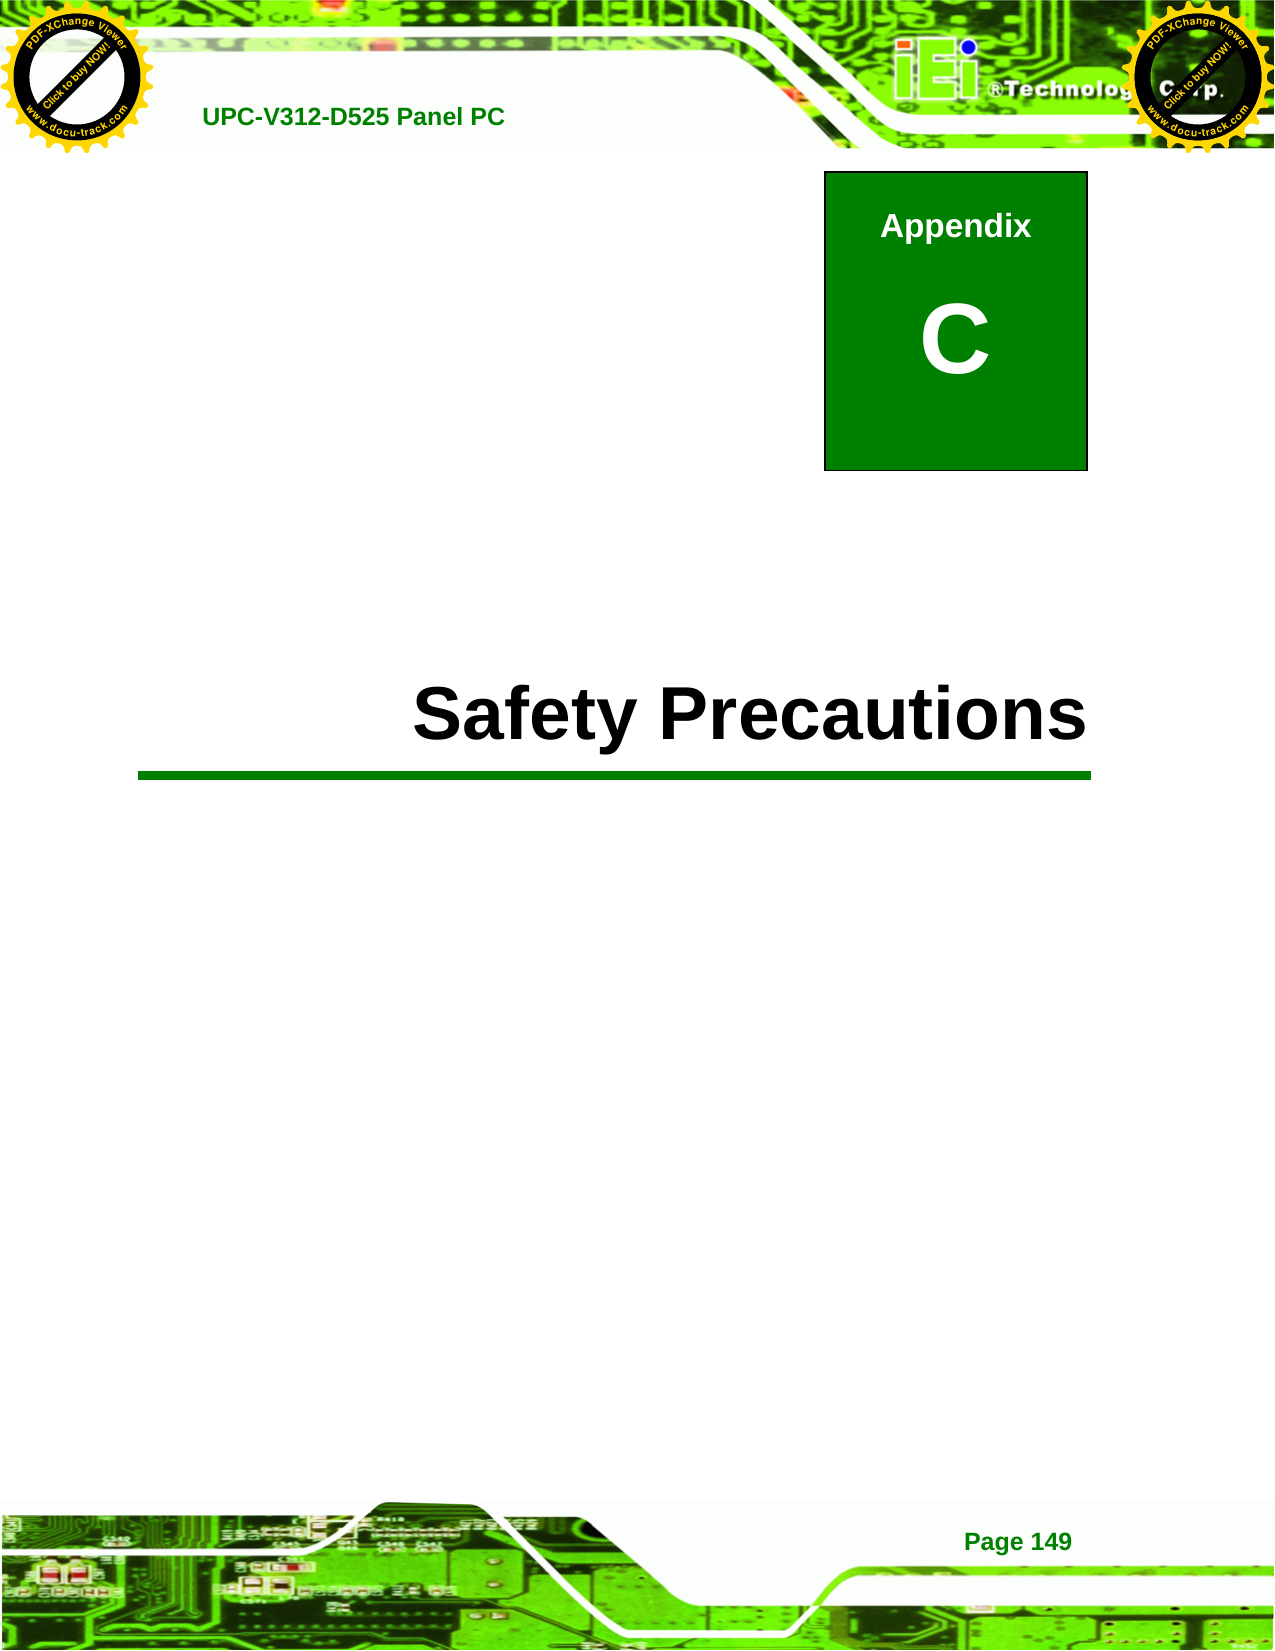   UPC-V312-D525 Panel PC Page 149            C Safety Precautions Appendix C Click to buy NOW!PDF-XChange Viewerwww.docu-track.comClick to buy NOW!PDF-XChange Viewerwww.docu-track.com